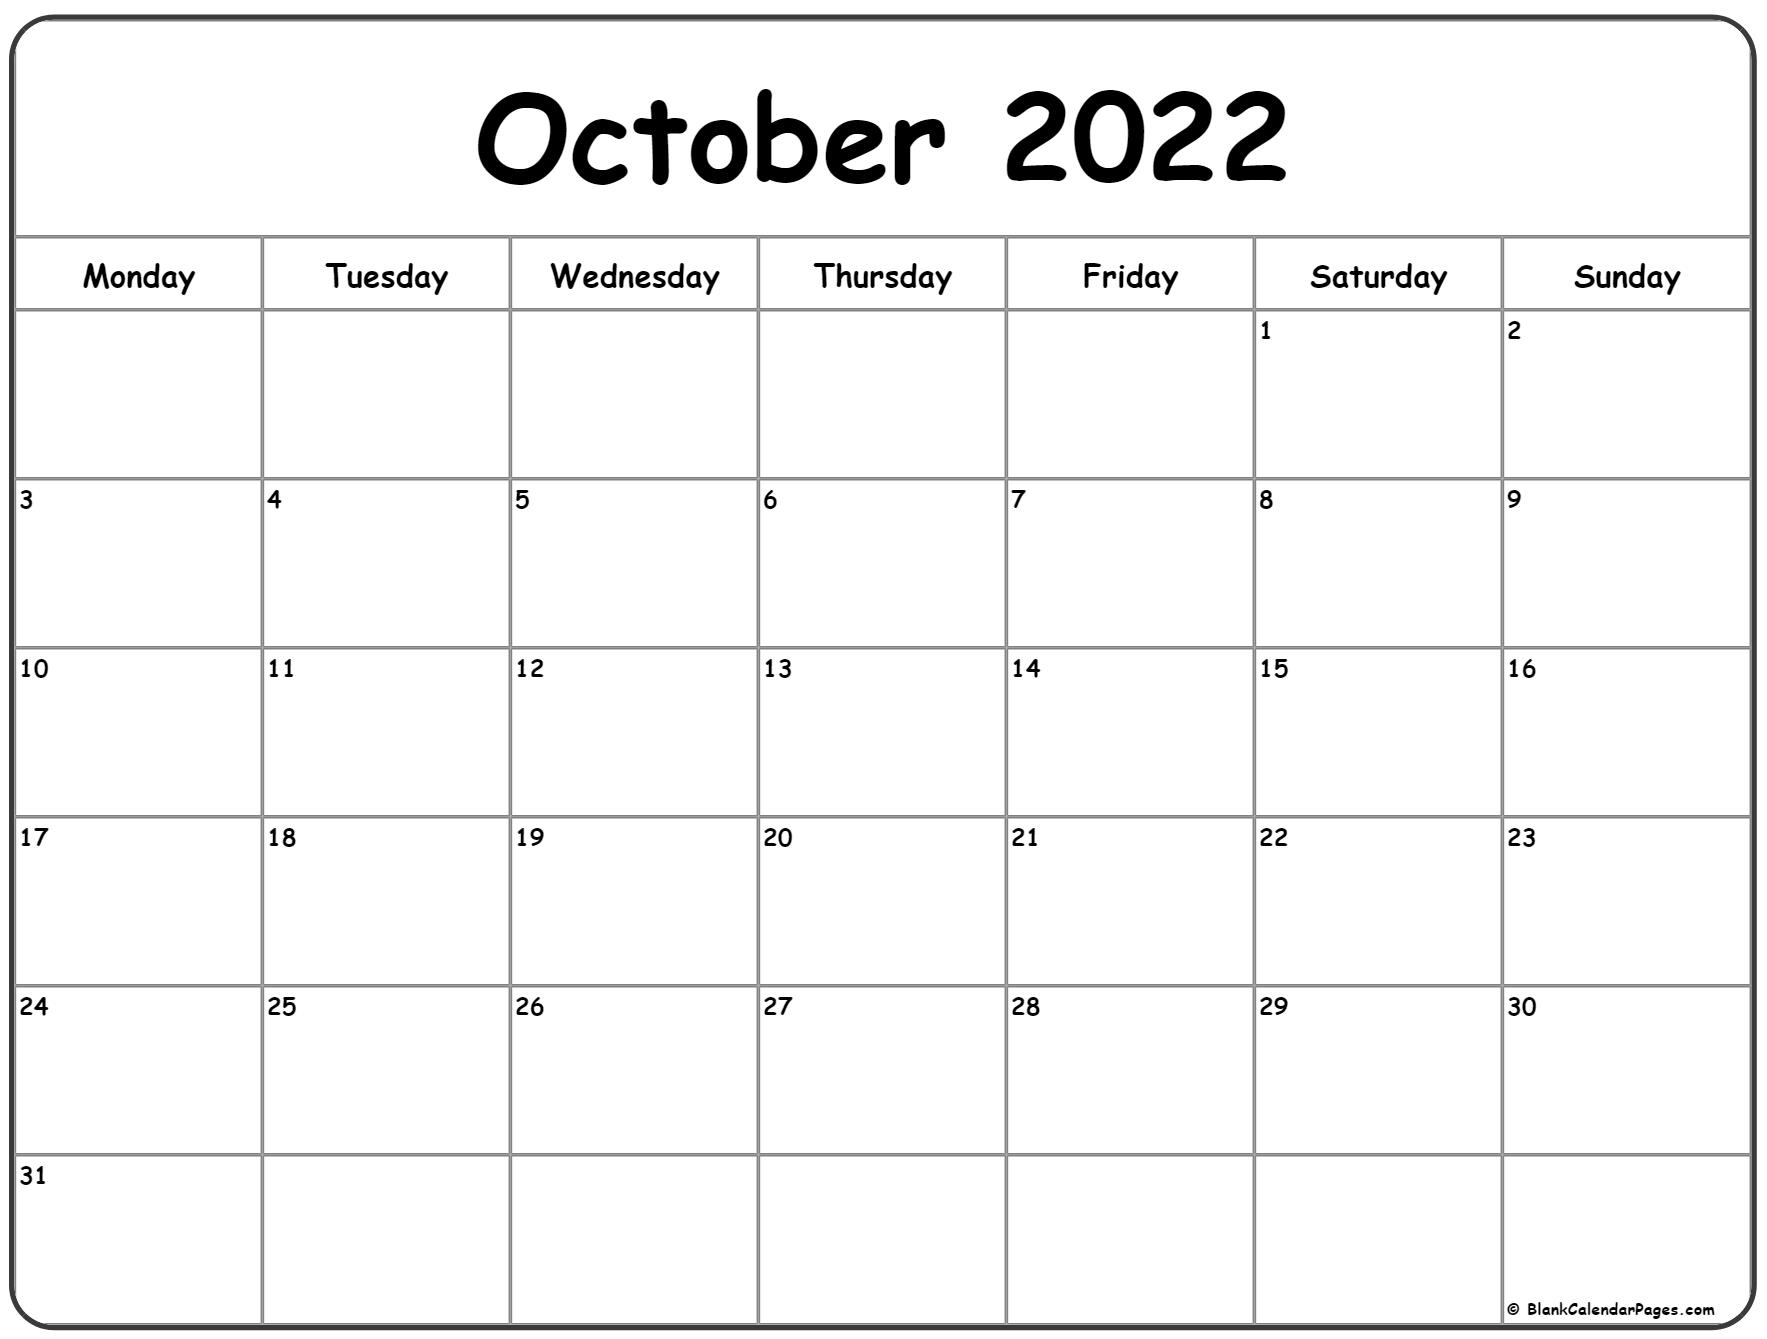 Take October 2022 Blank Calendar